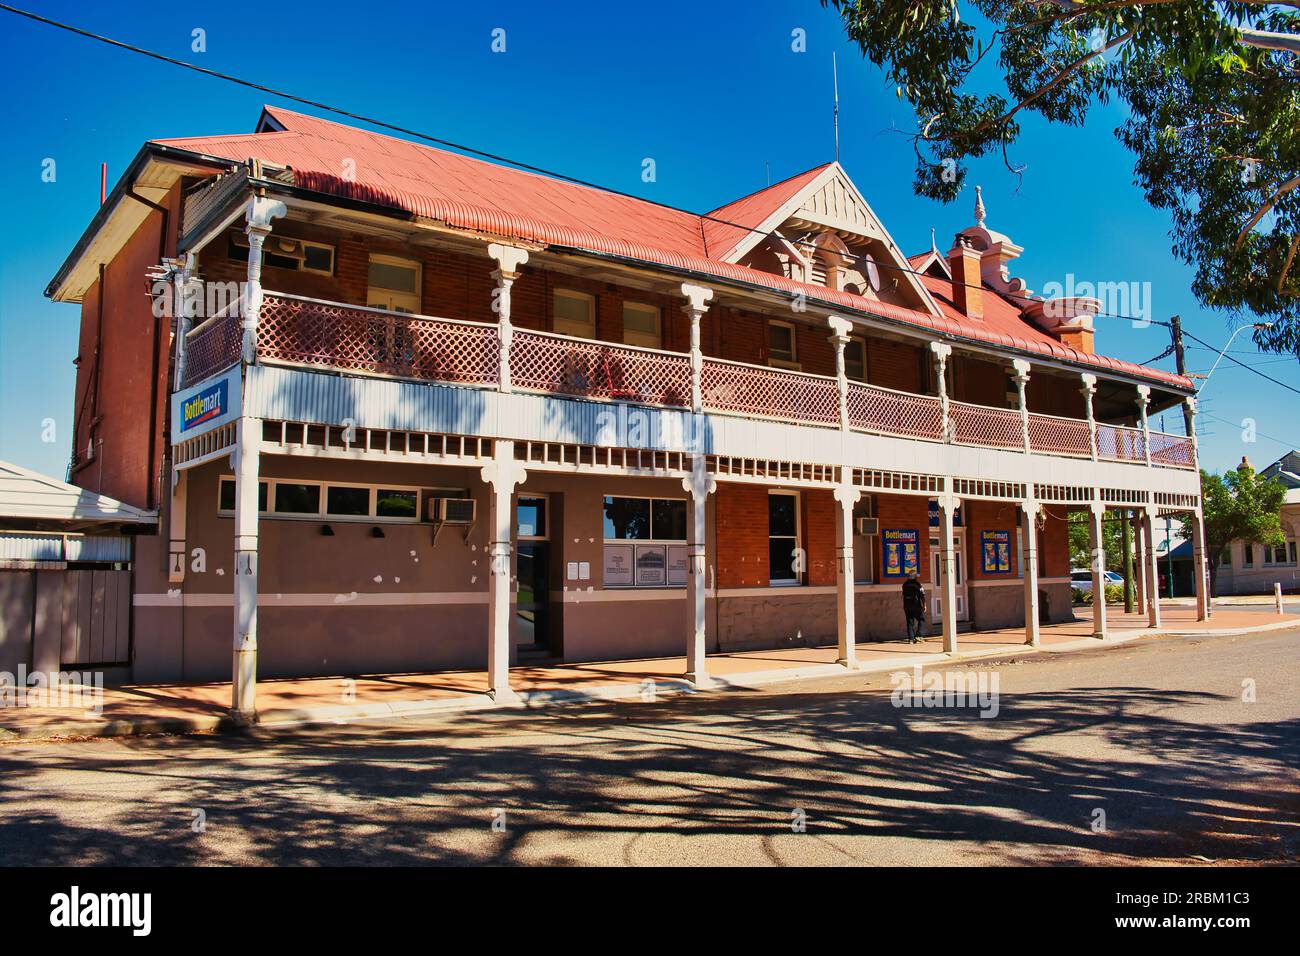 The heritage Moora Hotel in the town of Moora in the Western Australian wheatbelt. Stock Photo